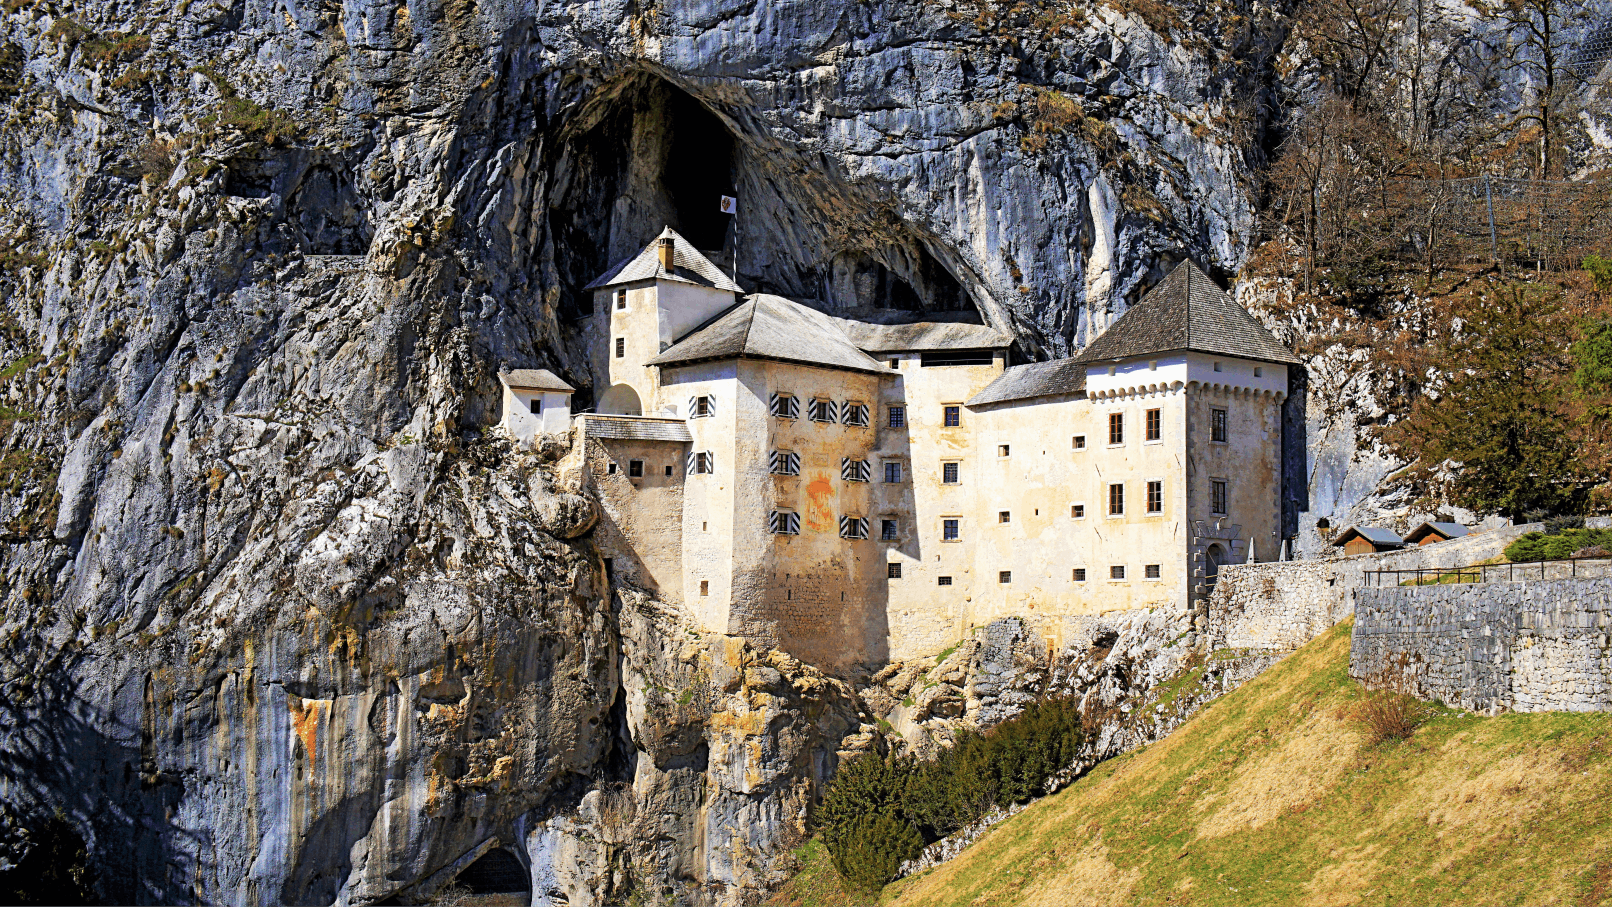 Top choice Postojna cave and Predjama castle tour